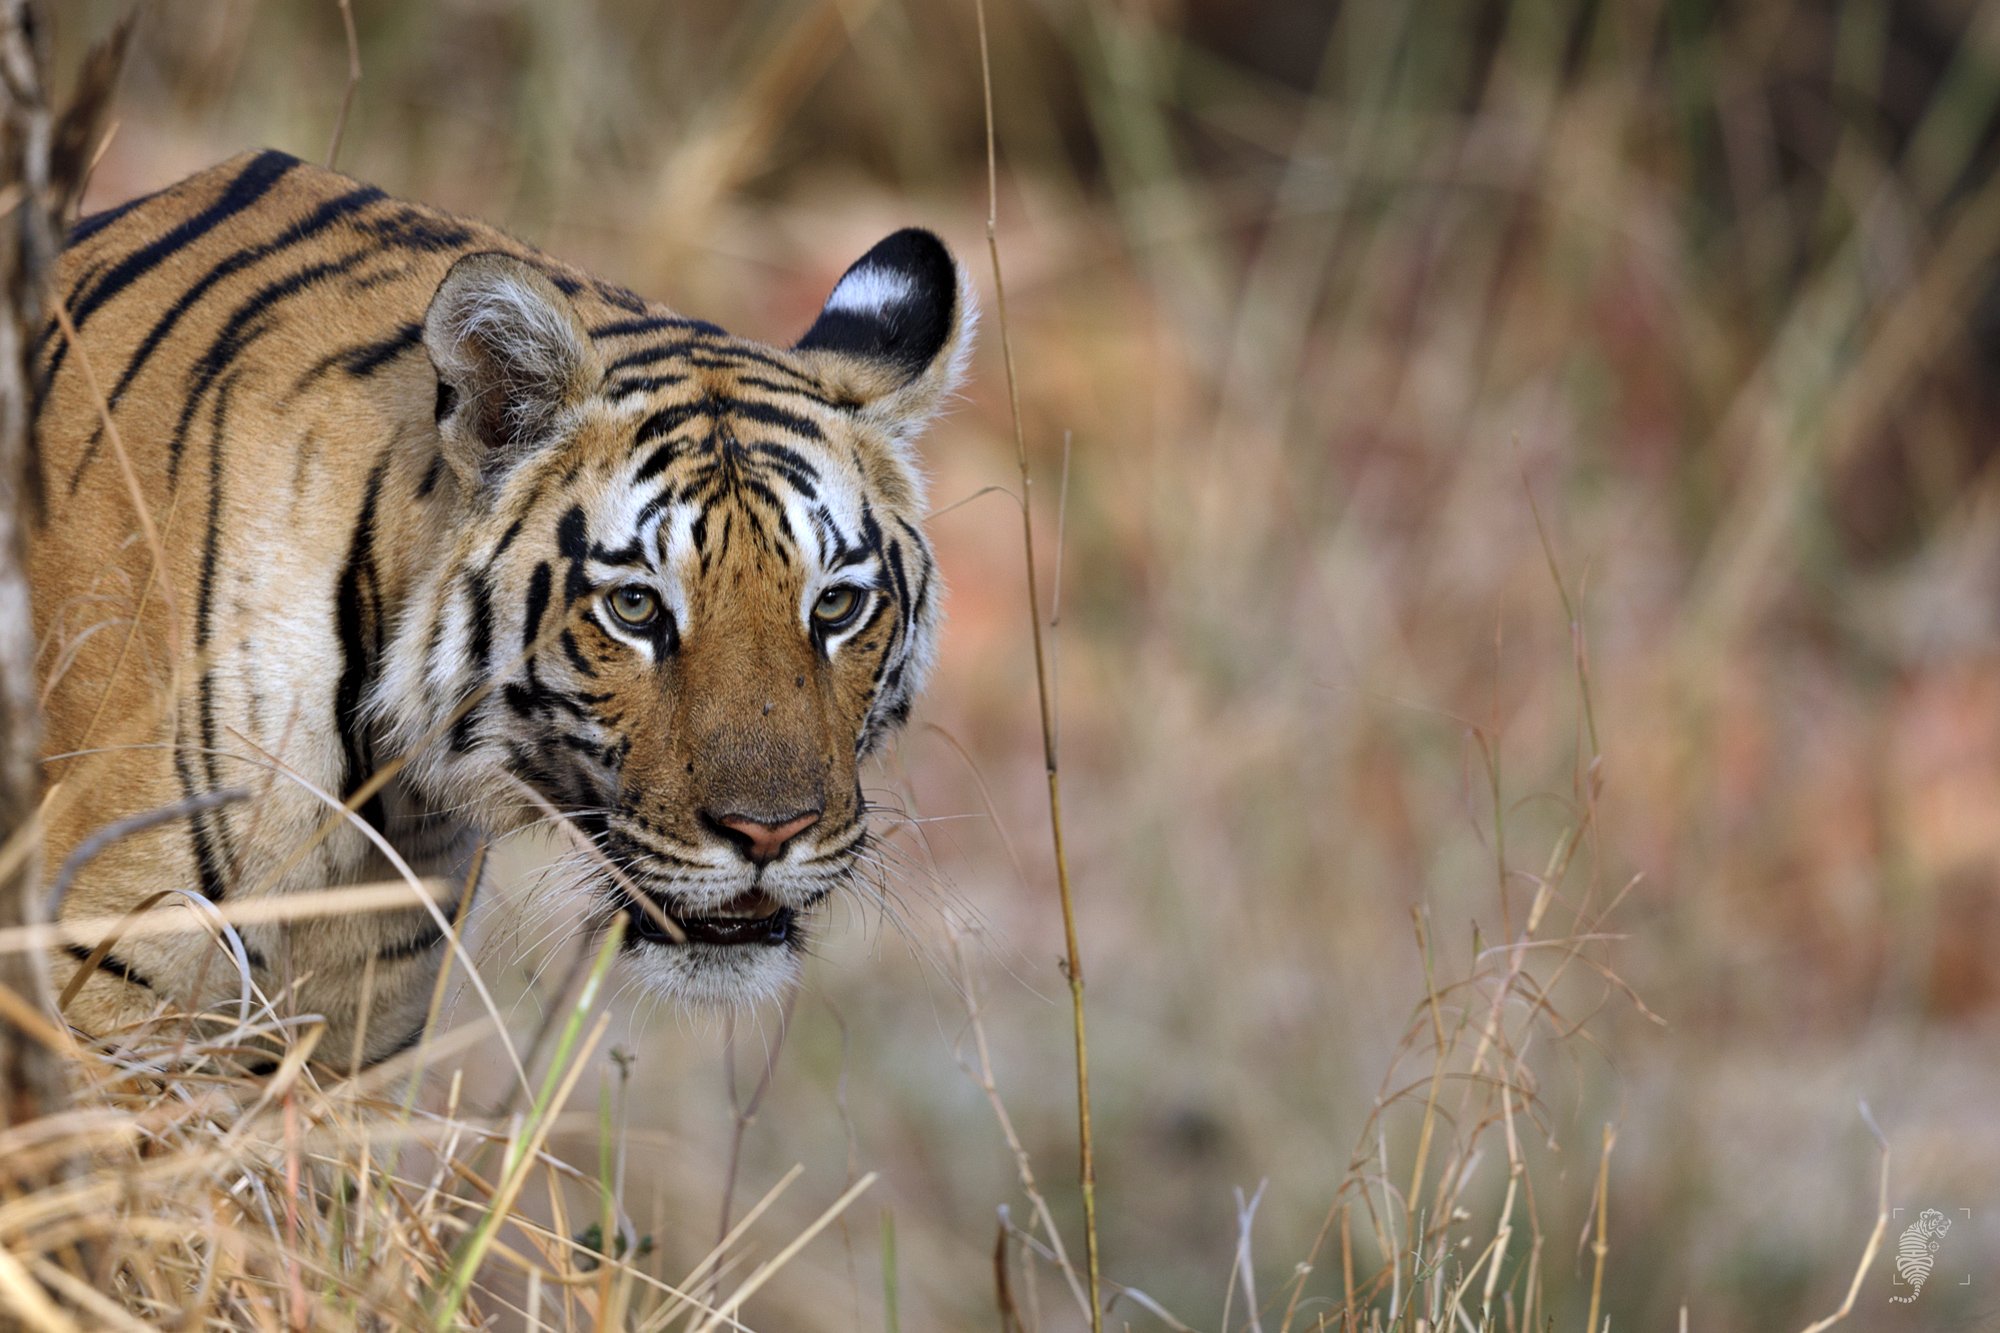 #Wildlife, #INdia #Canon #Tigers #500mm, Abhijit D